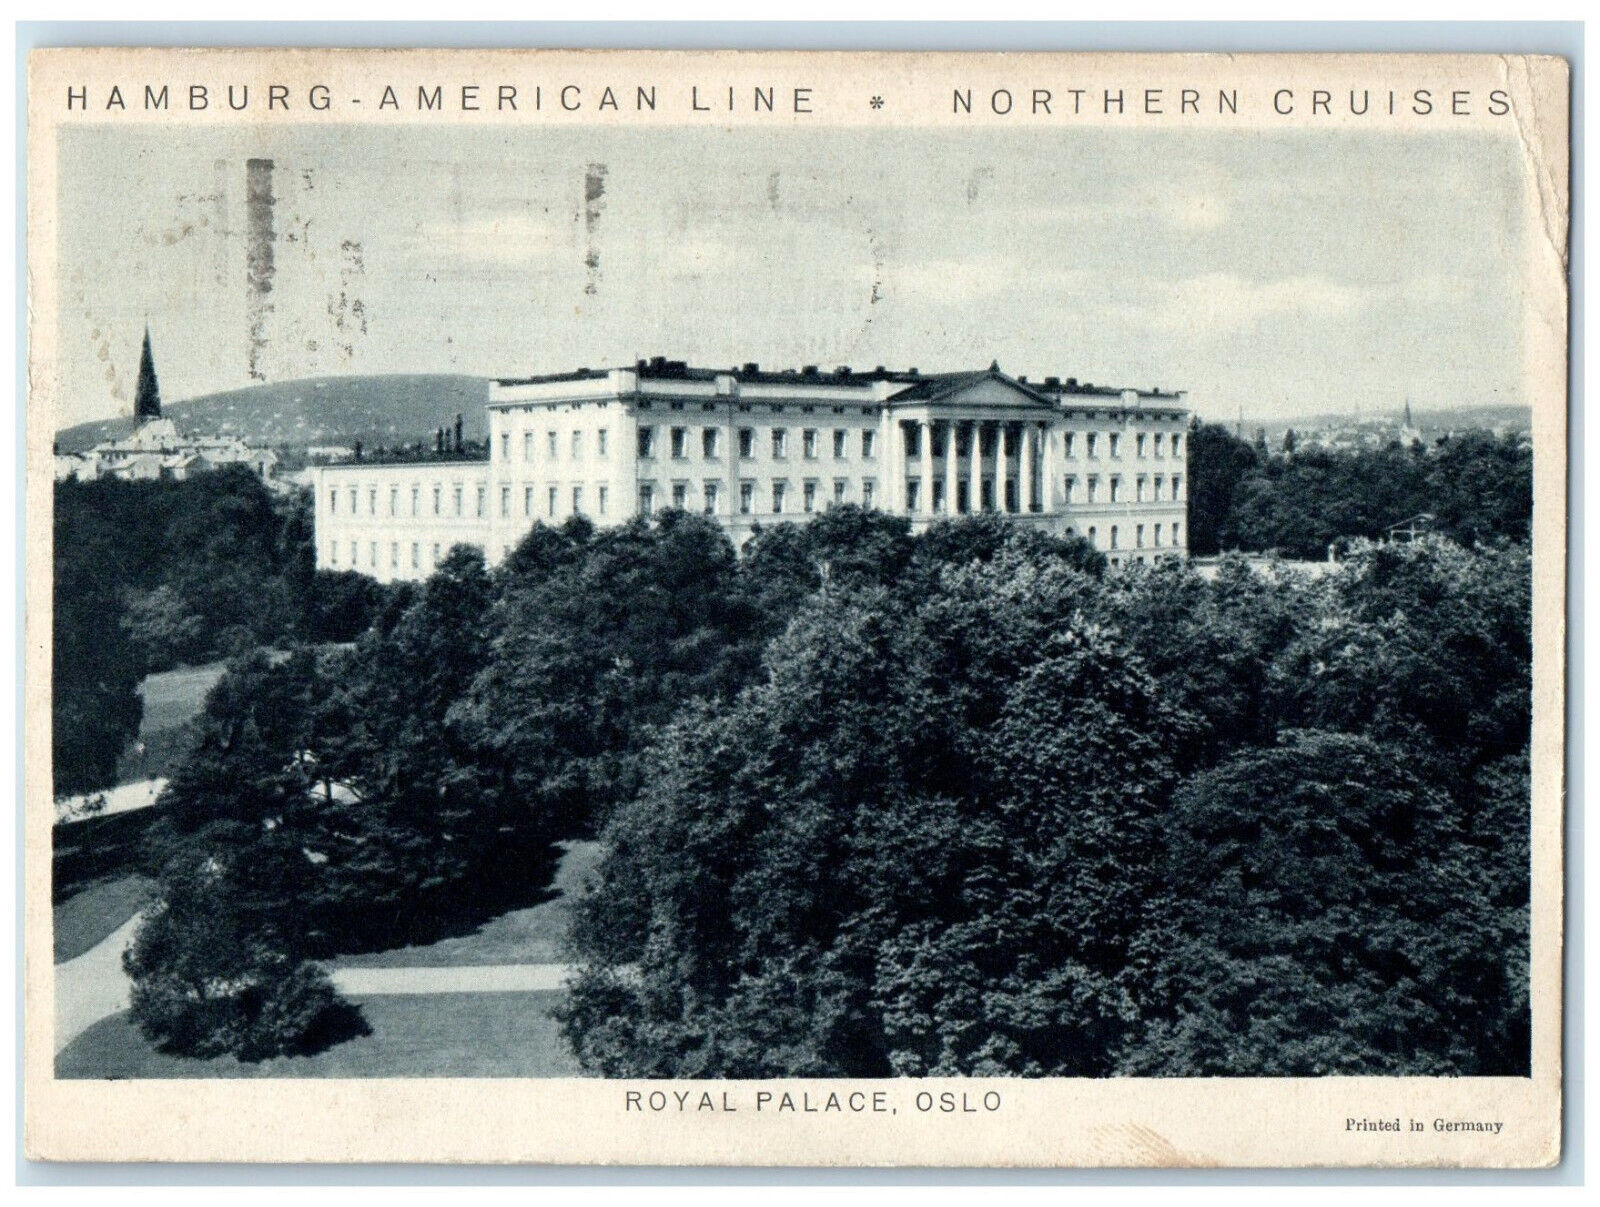 1930 Reliance Steamer Cruise Hamburg American Line Royal Palace Oslo Postcard